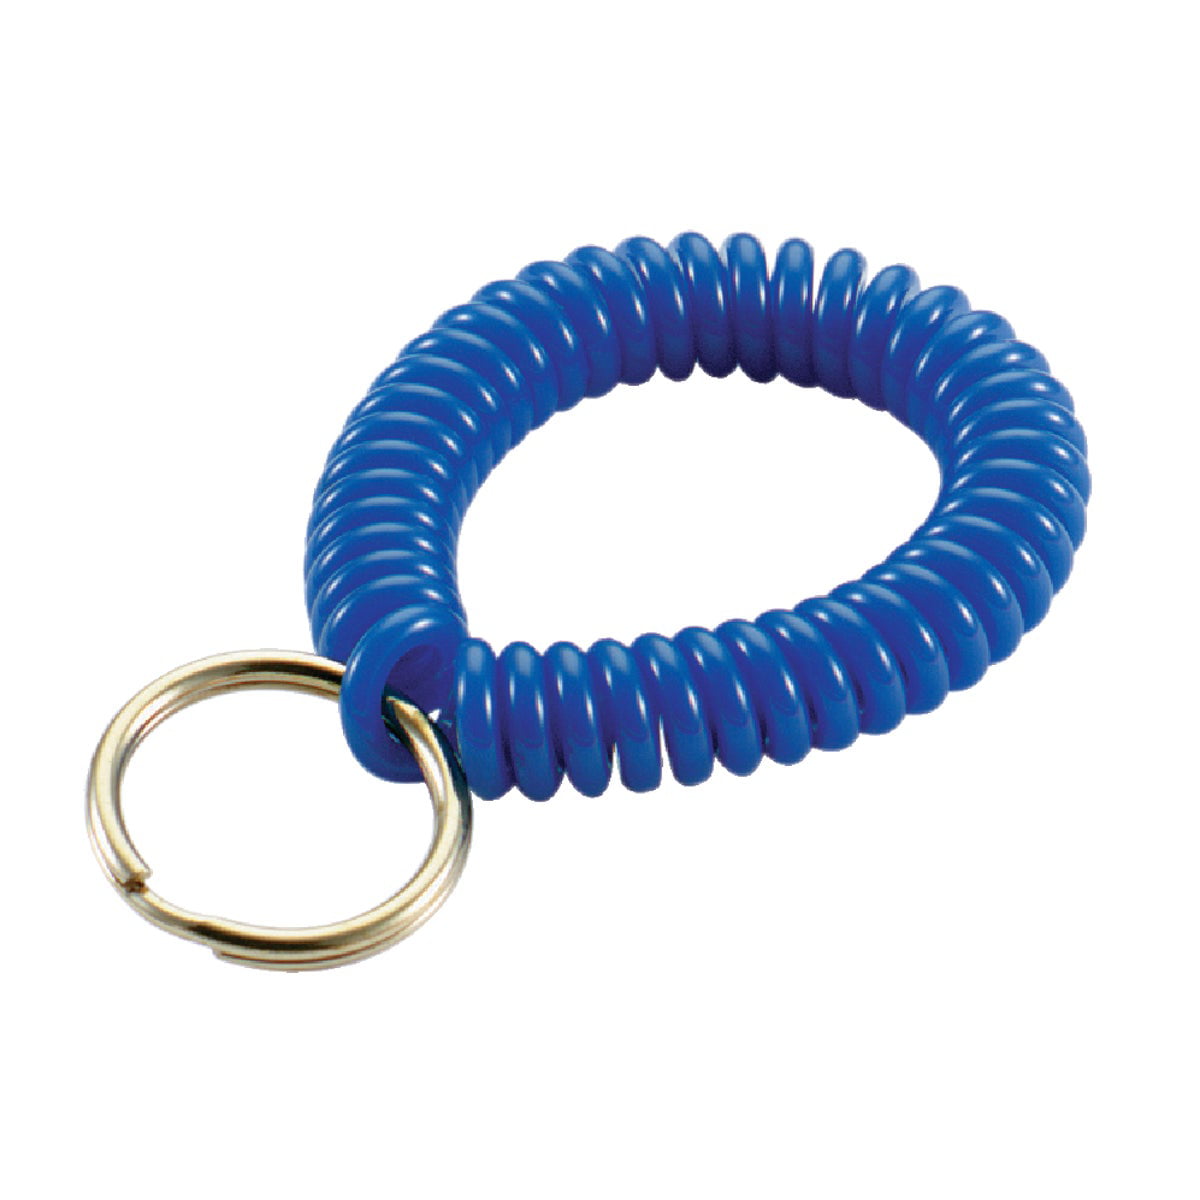 Plastic Coil Wrist Band Key Ring Stretchable Spring Bracelet Chain Keyring... 